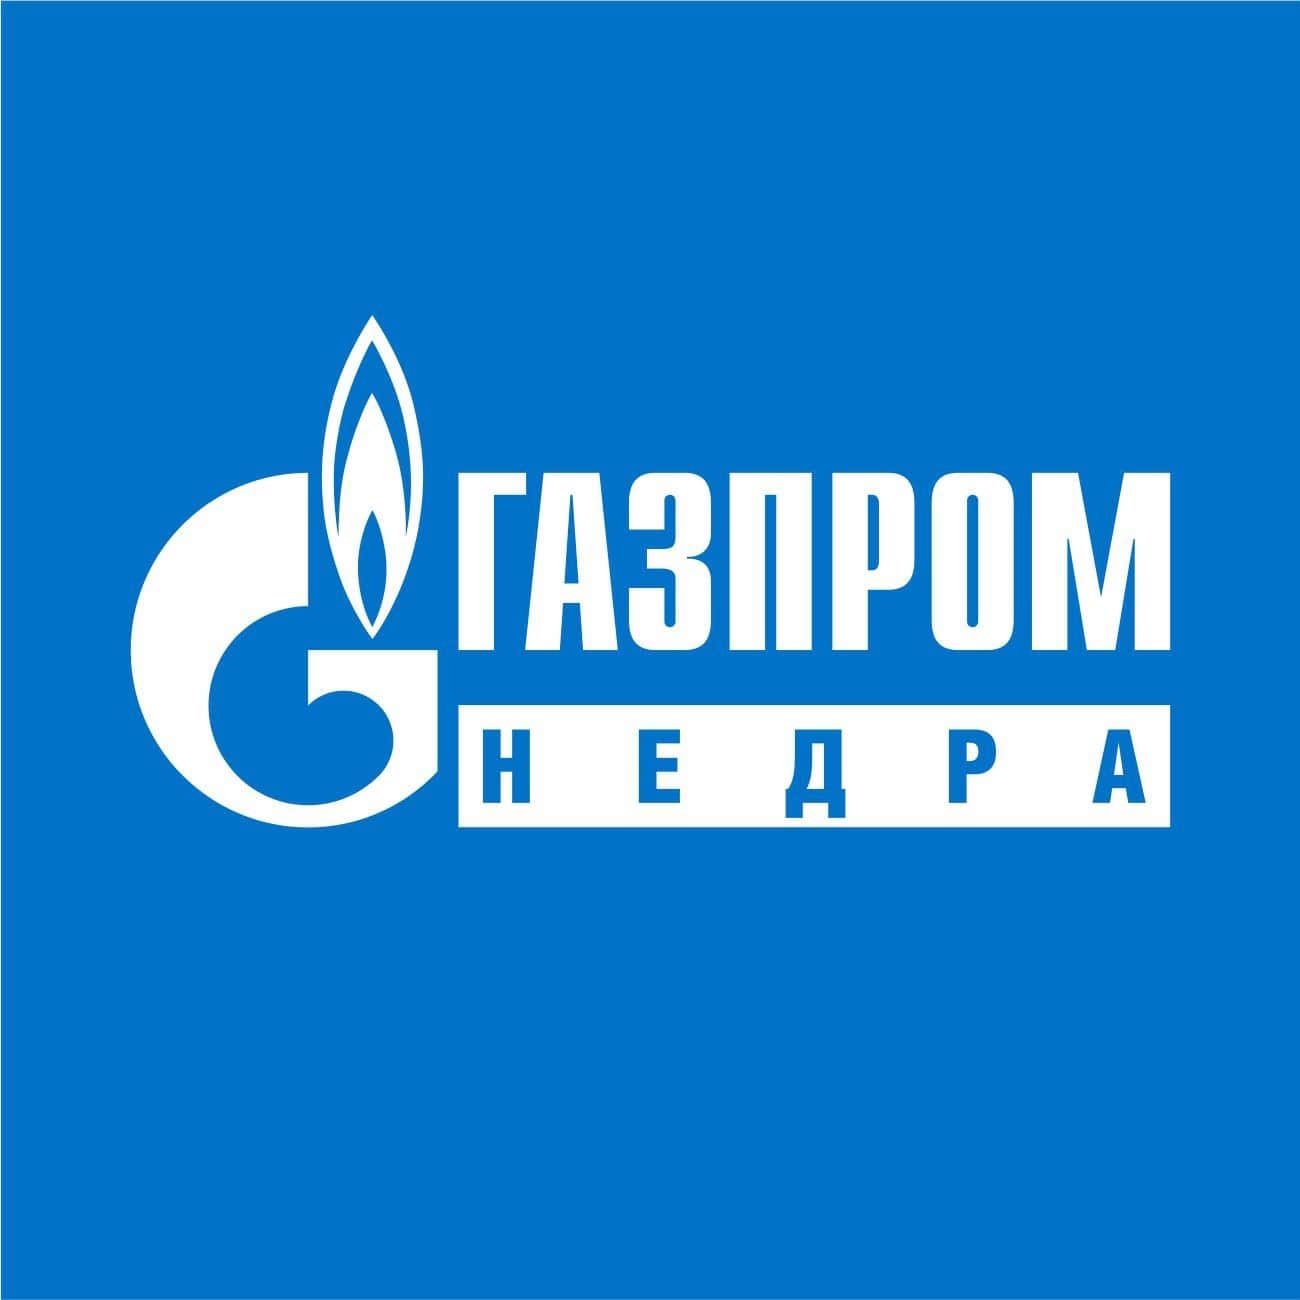 014 lwsp gazpromnedra logo